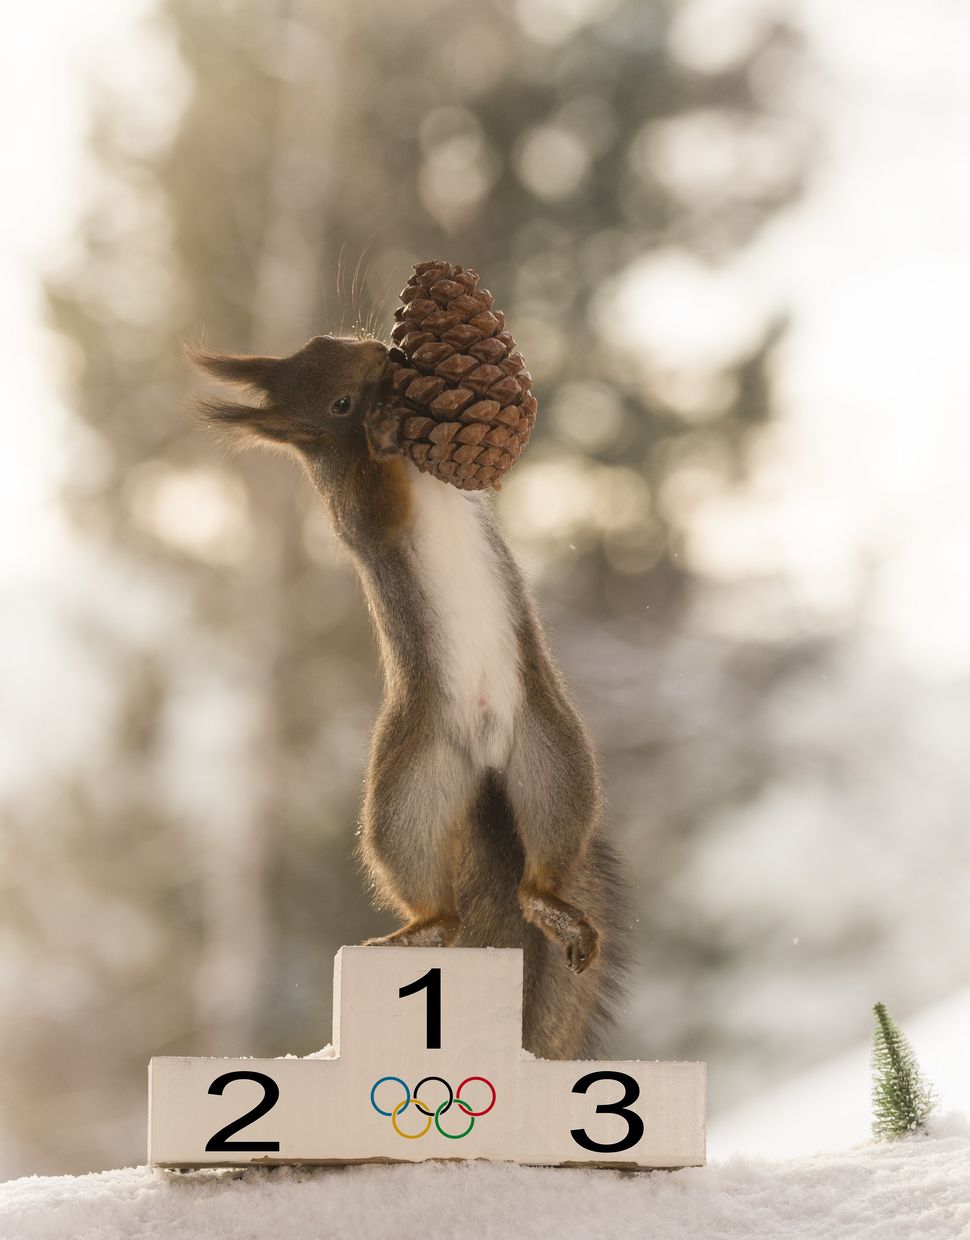 Olympic squirrel, photo by Geert Weggen/WENN